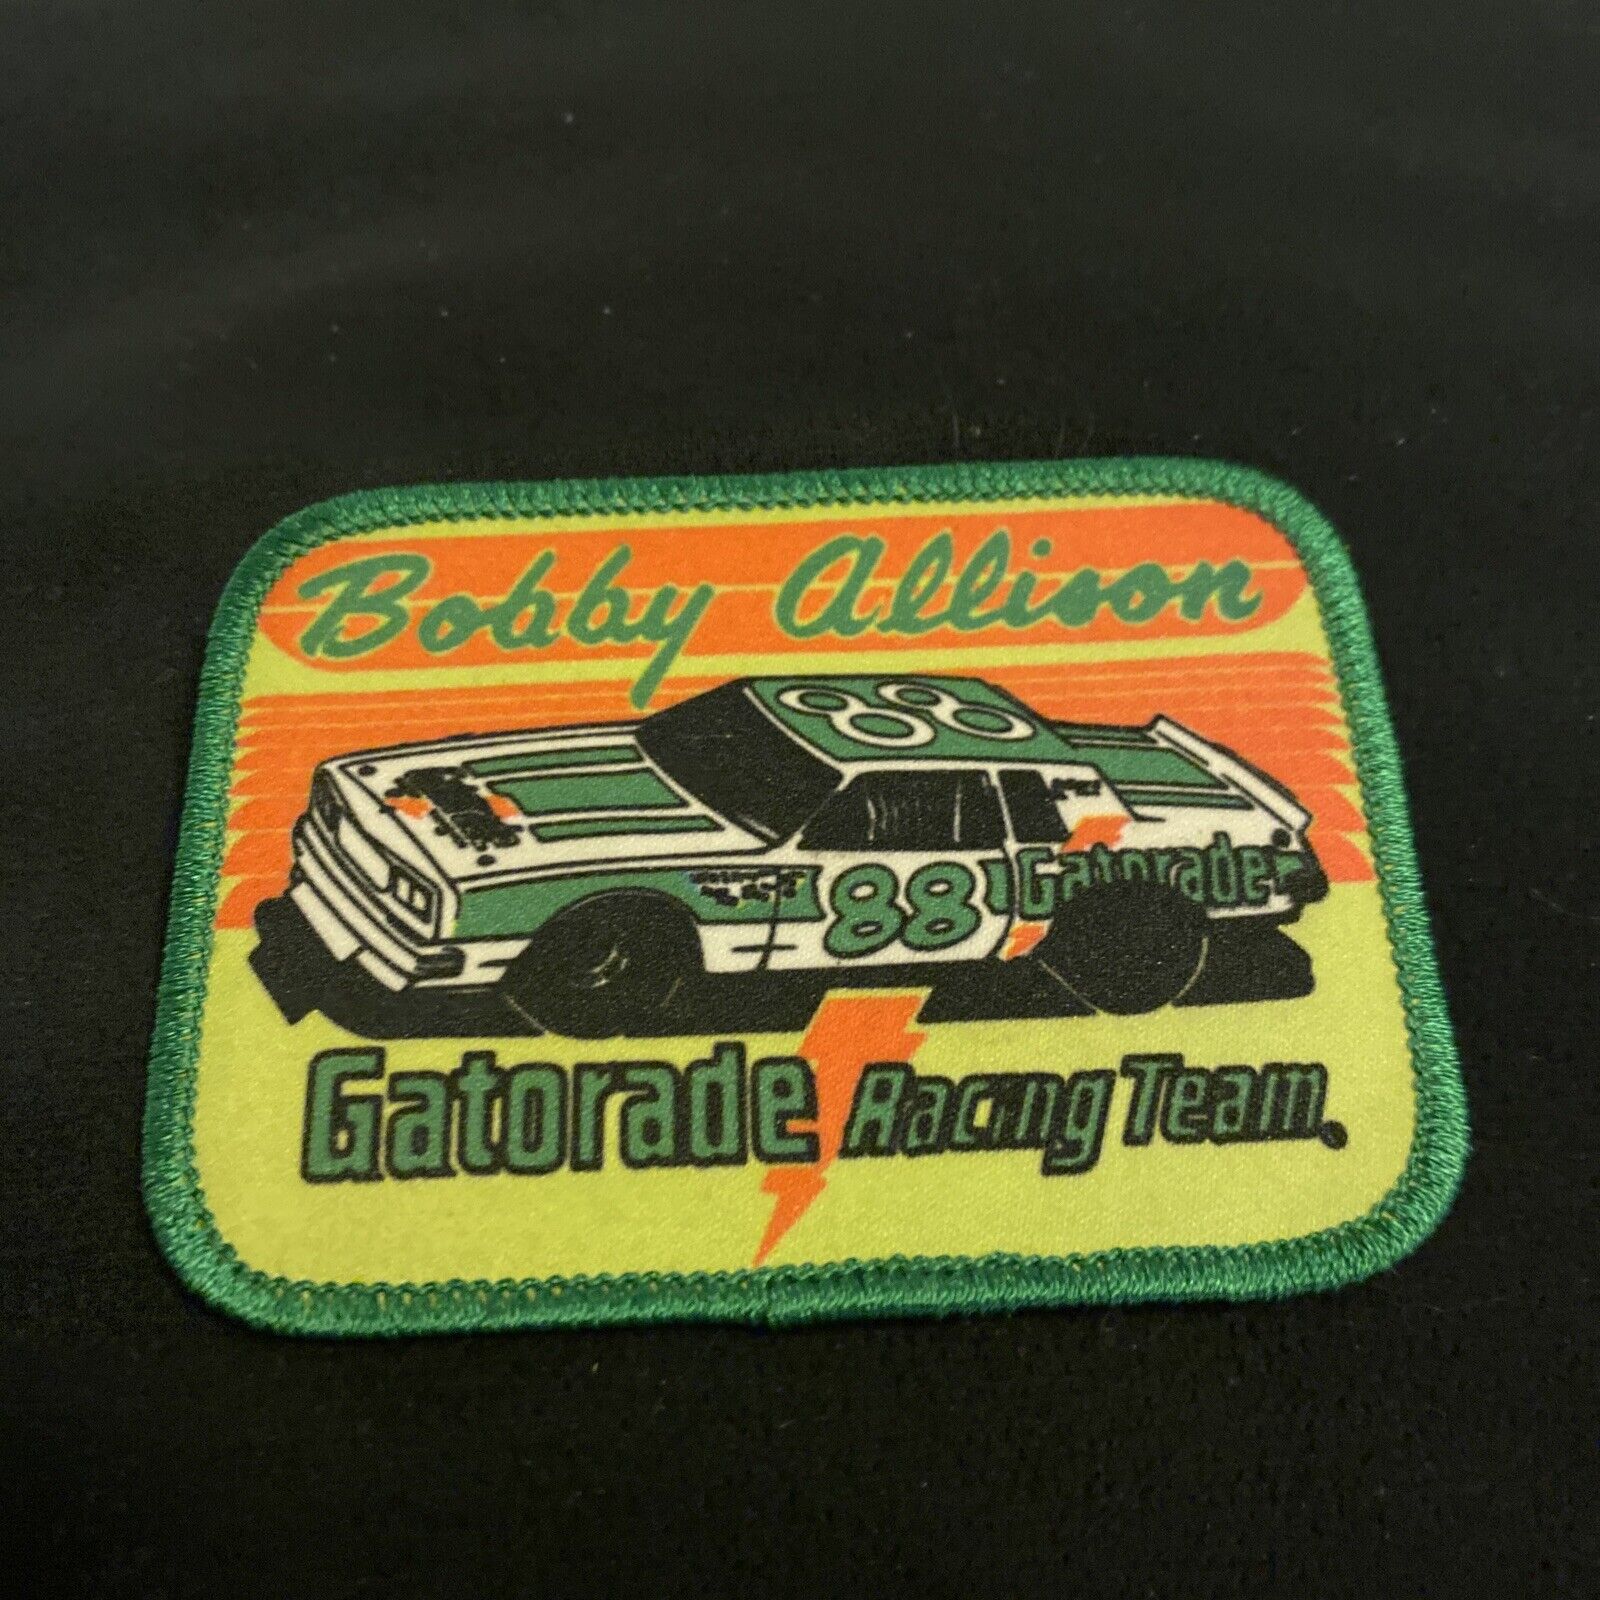 VTG BOBBY ALLISON Gatorade Racing Team Sew On Patch